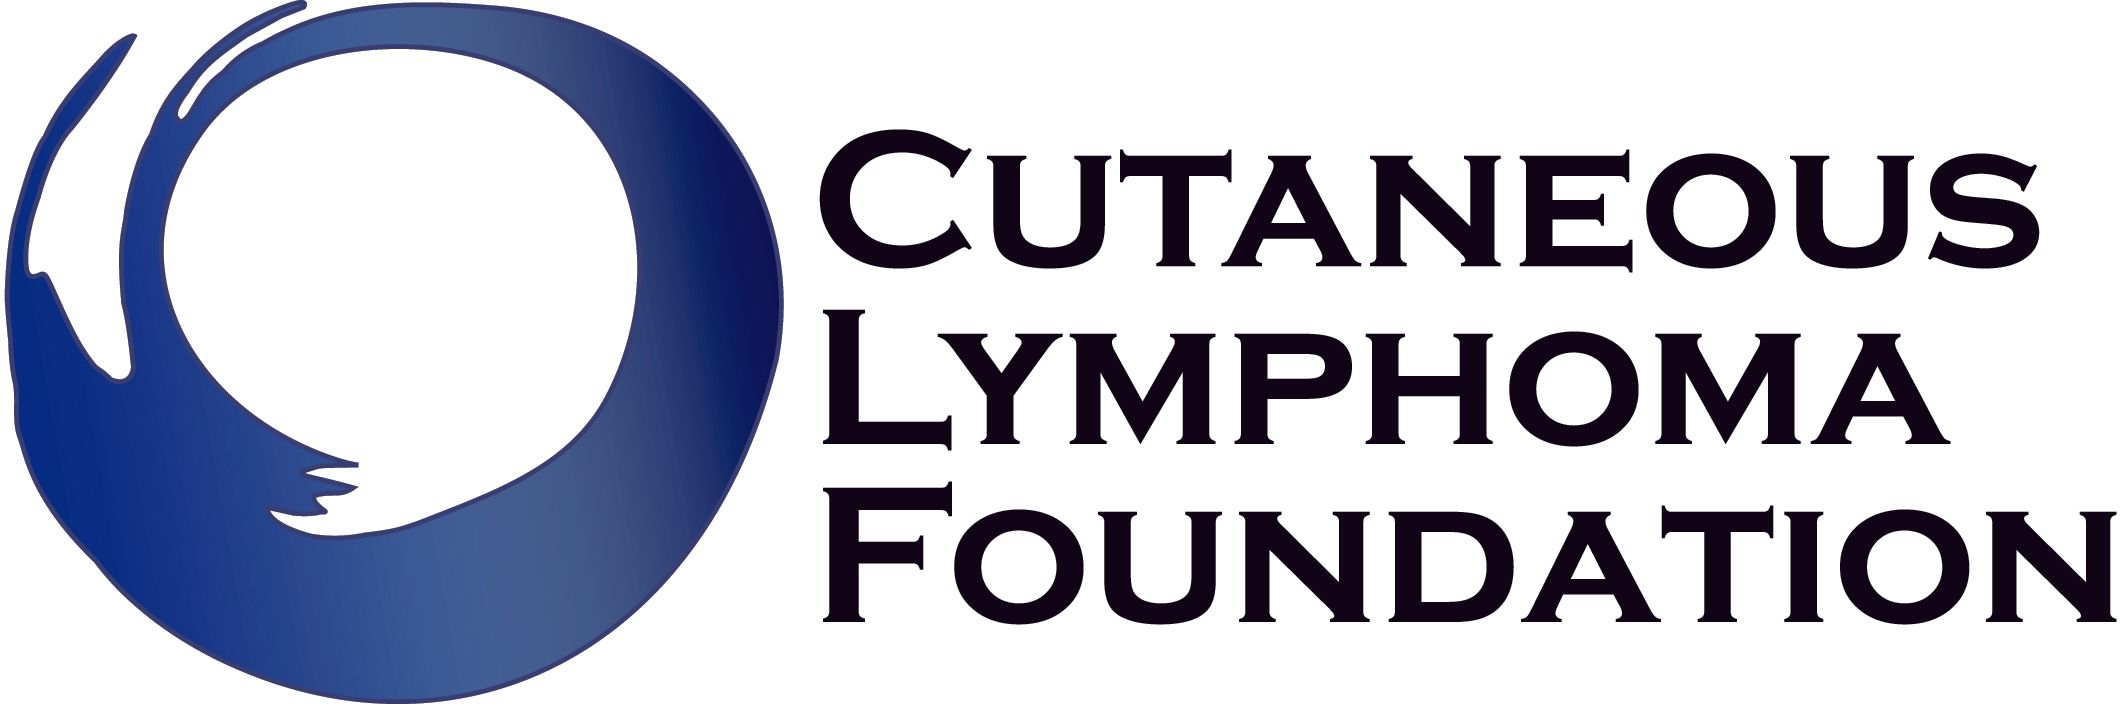 Cutaneous Lymphoma Foundation